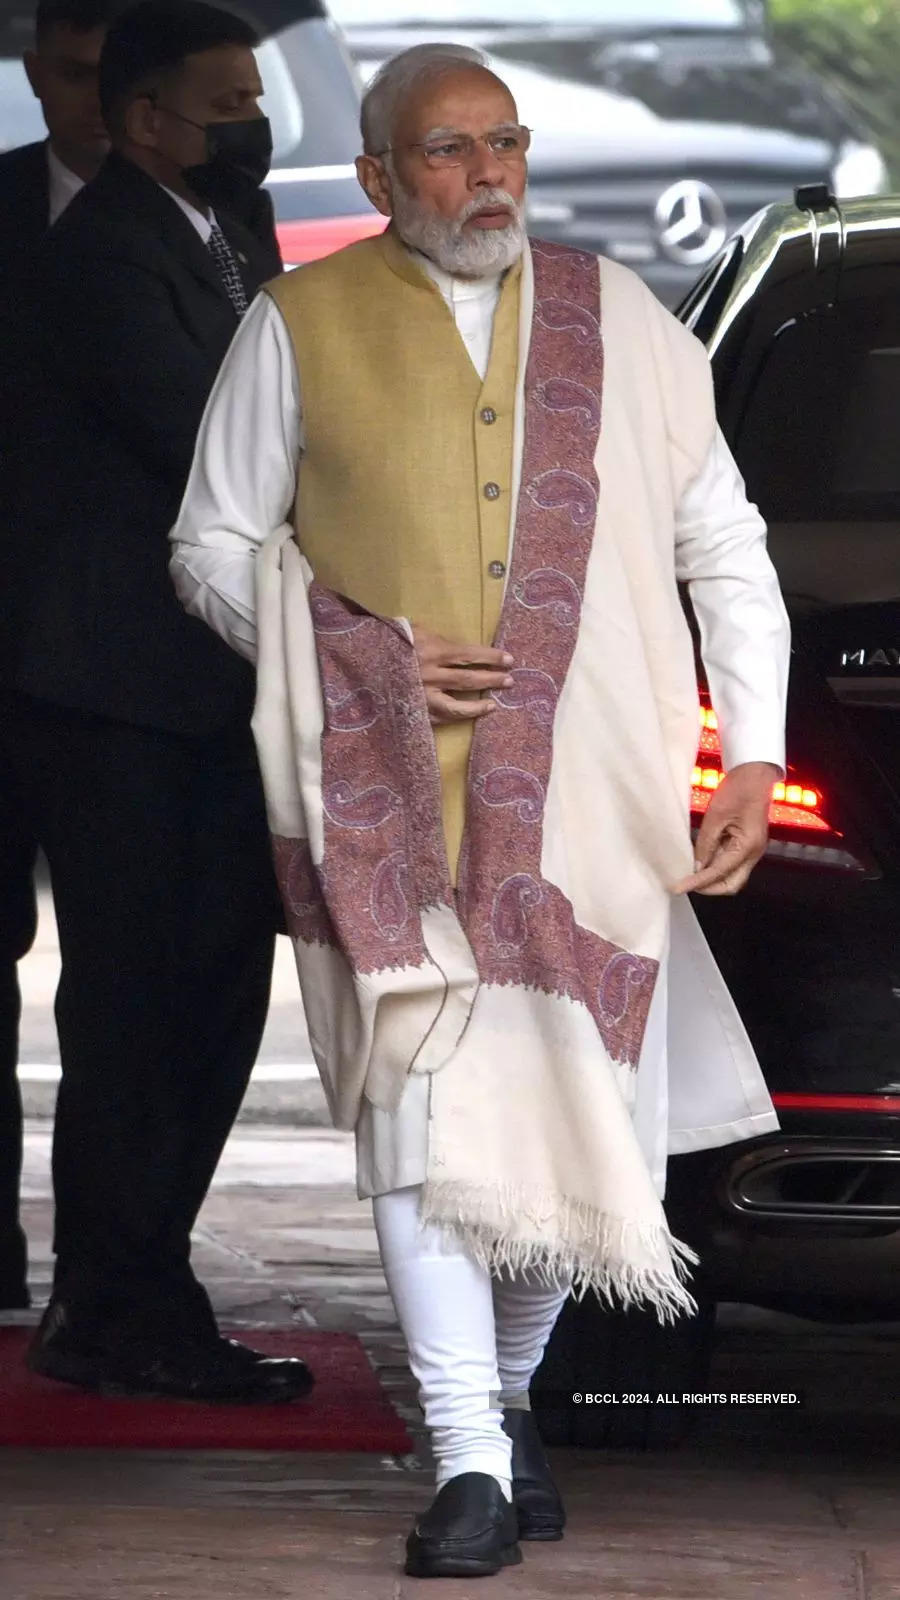 Modi's Famous Pinstripe Suit Sells for $690,000 at Auction